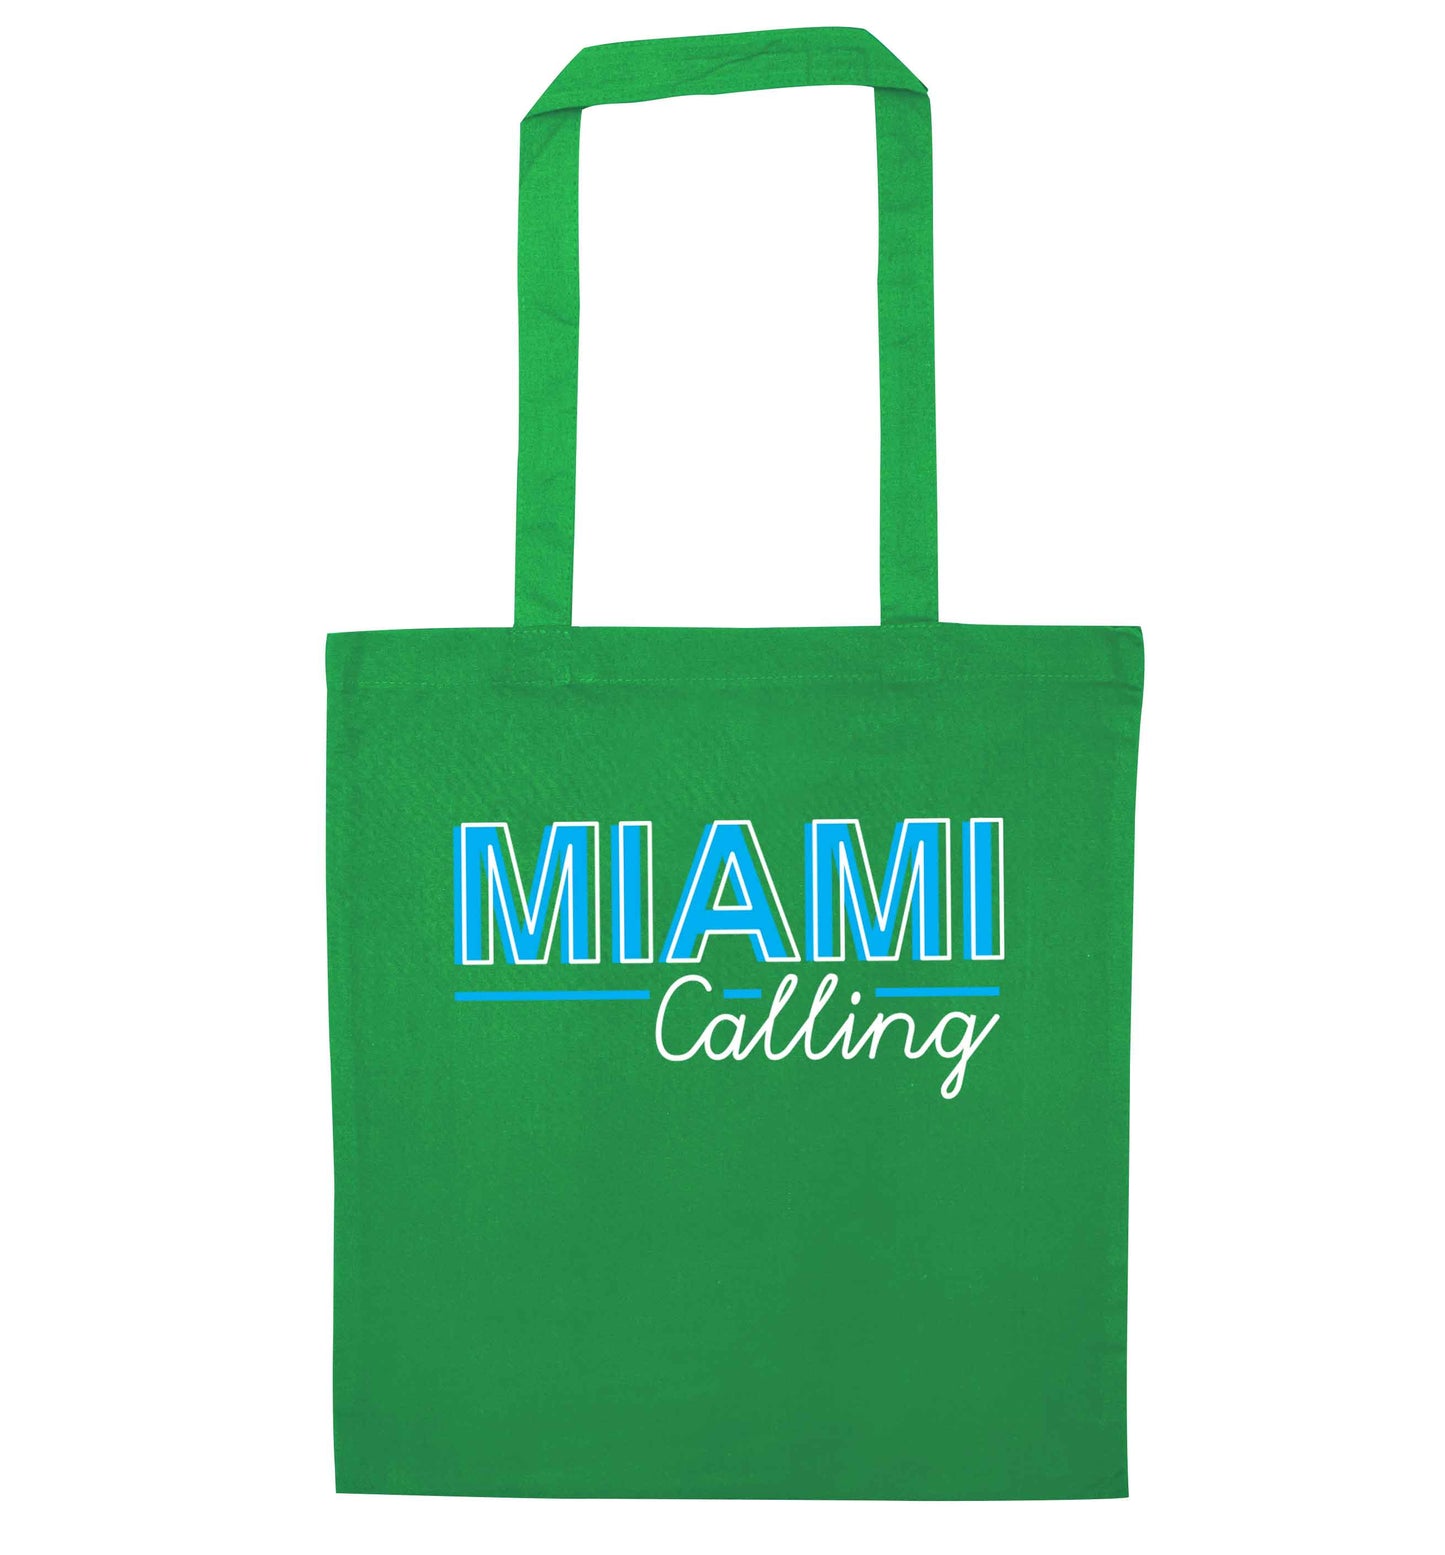 Miami calling green tote bag